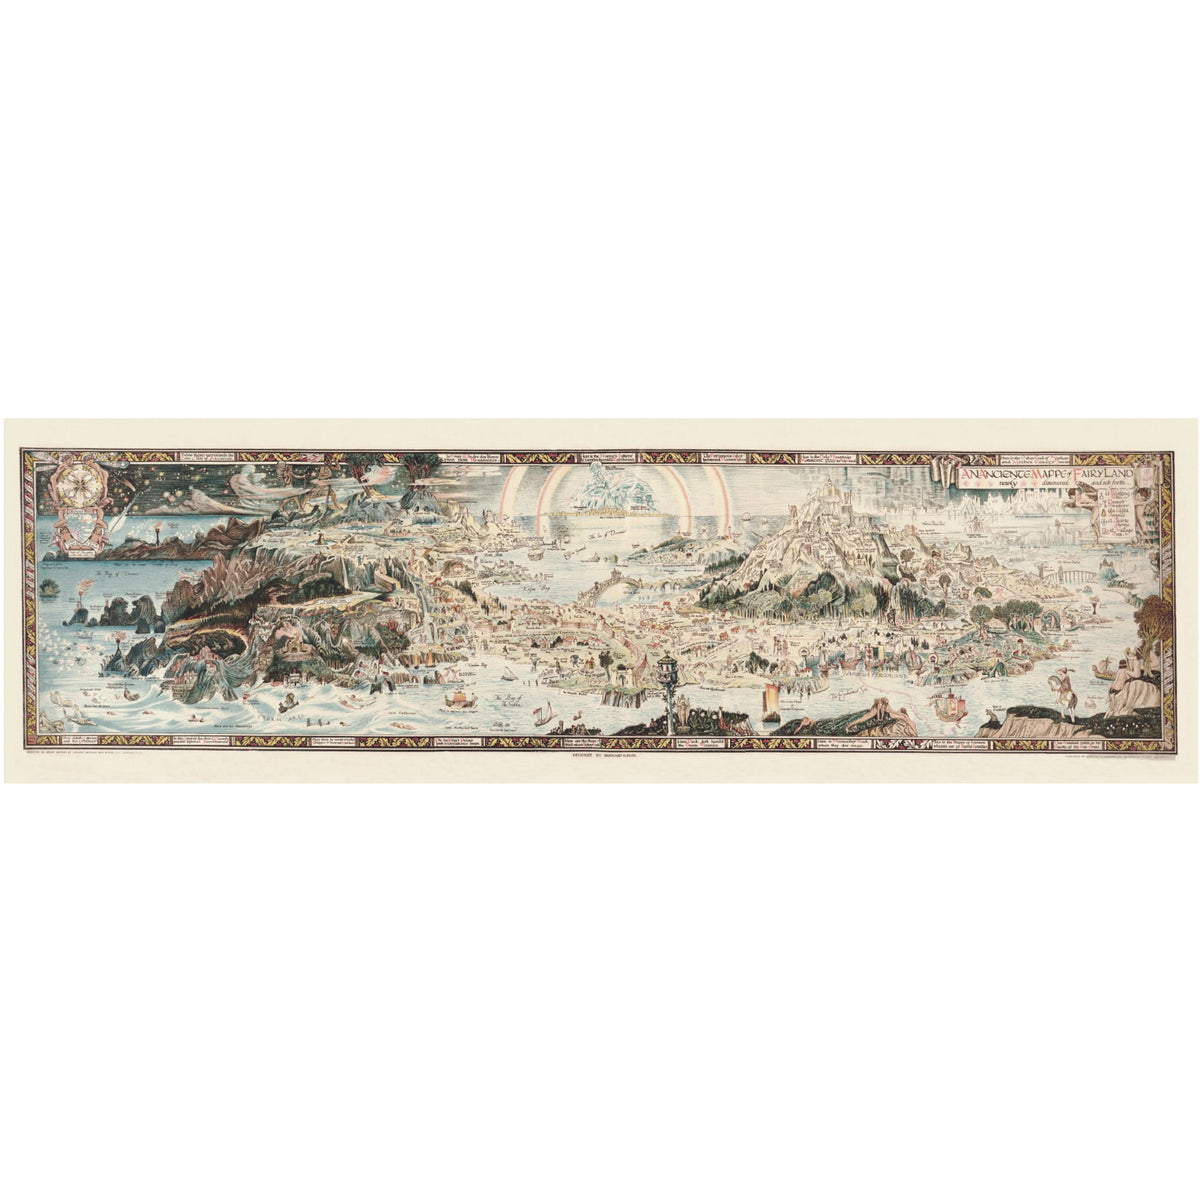 Mappe of Fairyland laid on cloth